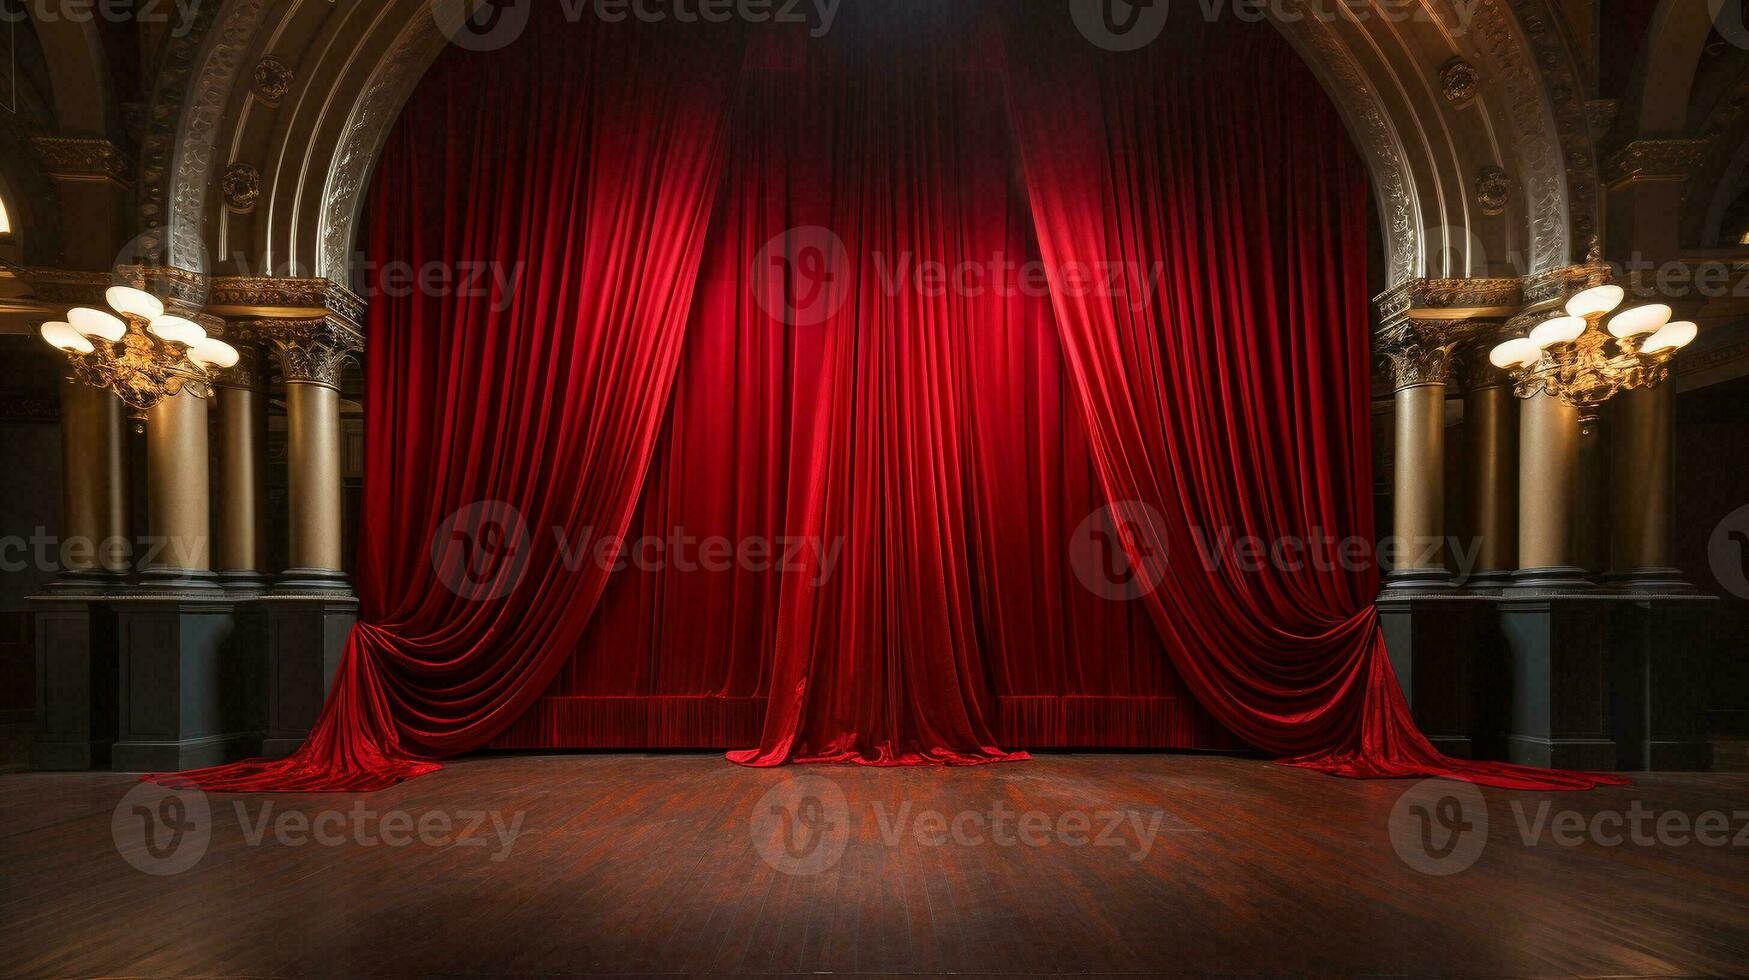 dramatisch lit glanzend rood fluweel theater gordijnen en houten stadium vloer. generatief ai. foto